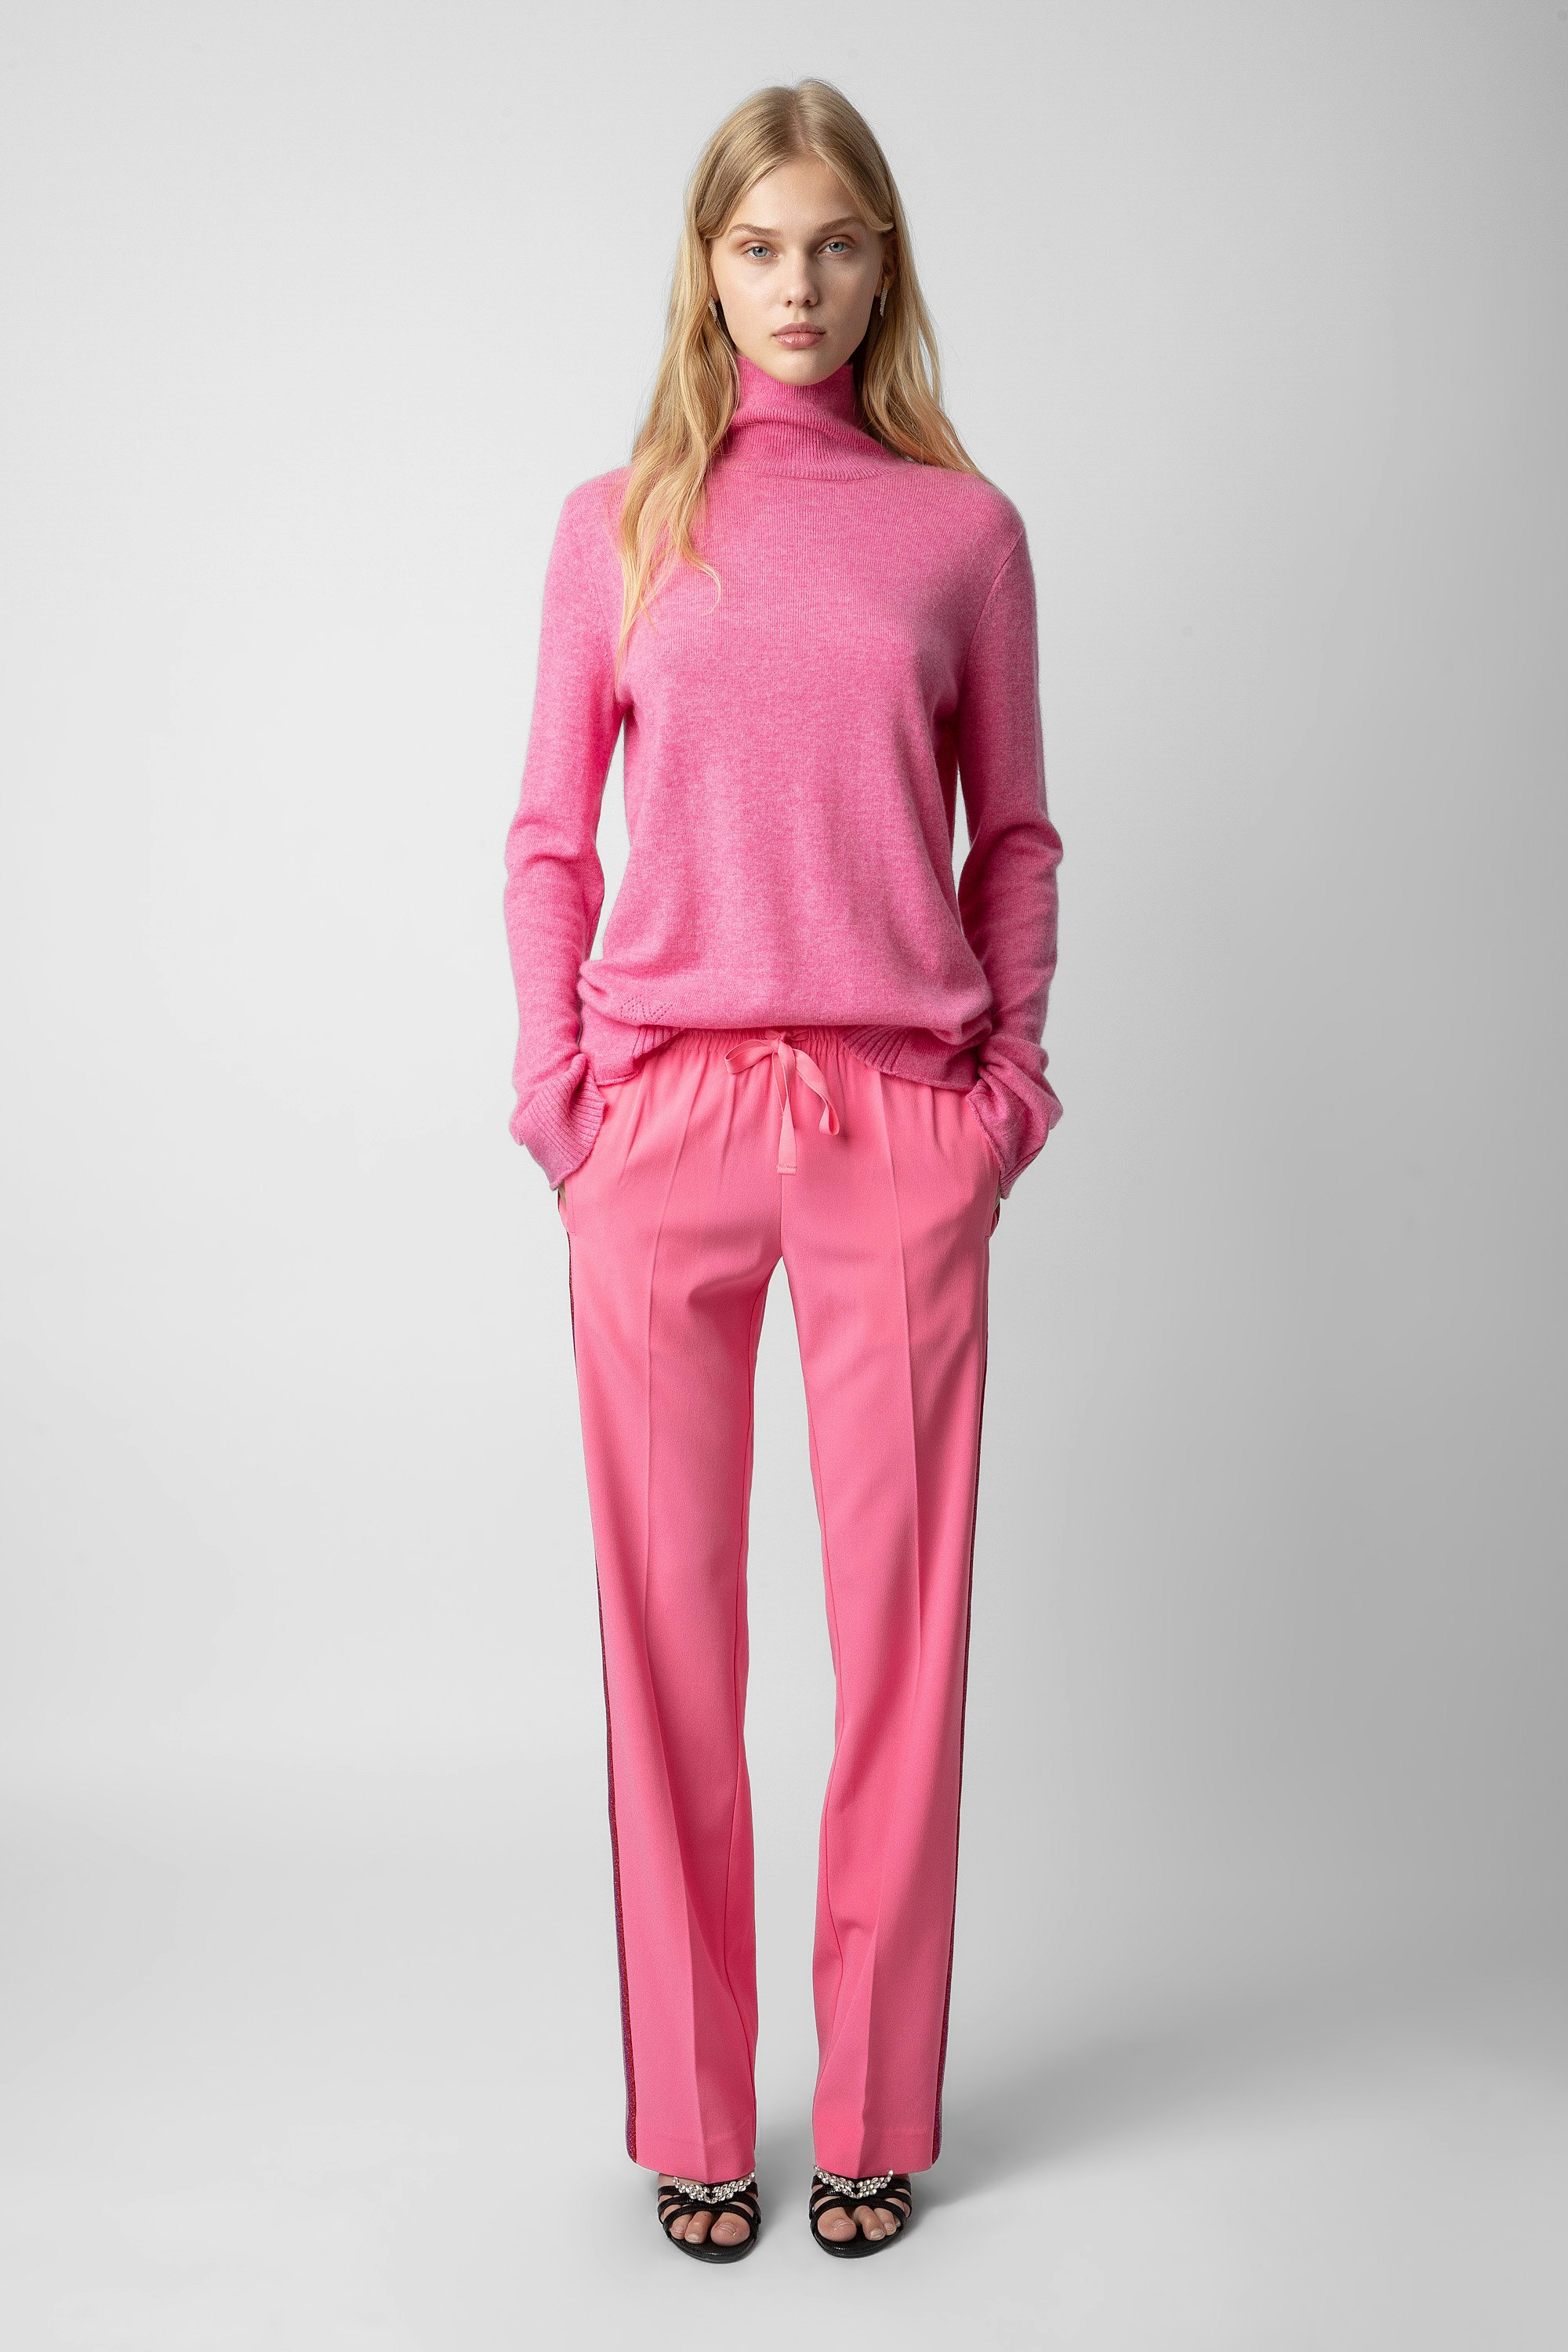 Pantaloni Pomy - Pantaloni da donna in crêpe rosa con strisce laterali a paillette